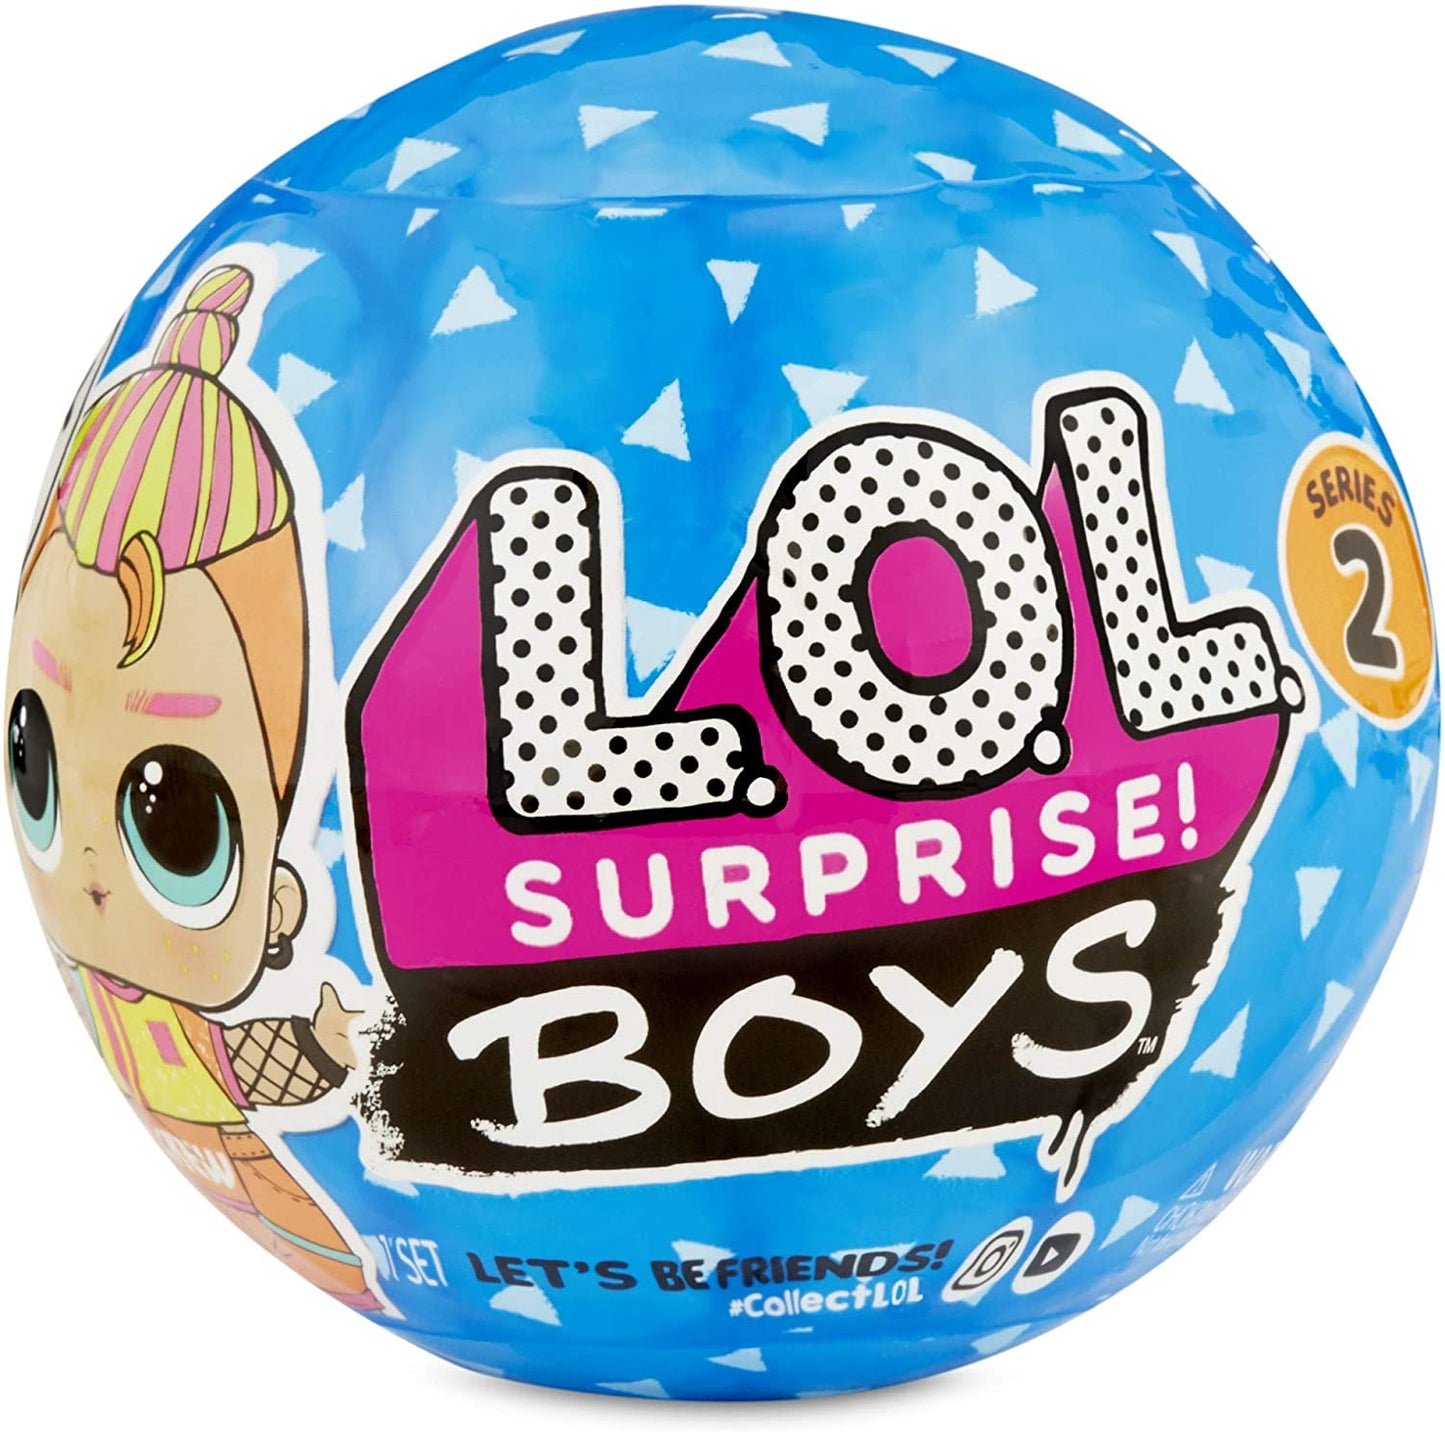 L.O.L. Surprise! 564799E7C Boys Series 2 Doll with 7 Surprises, Multi